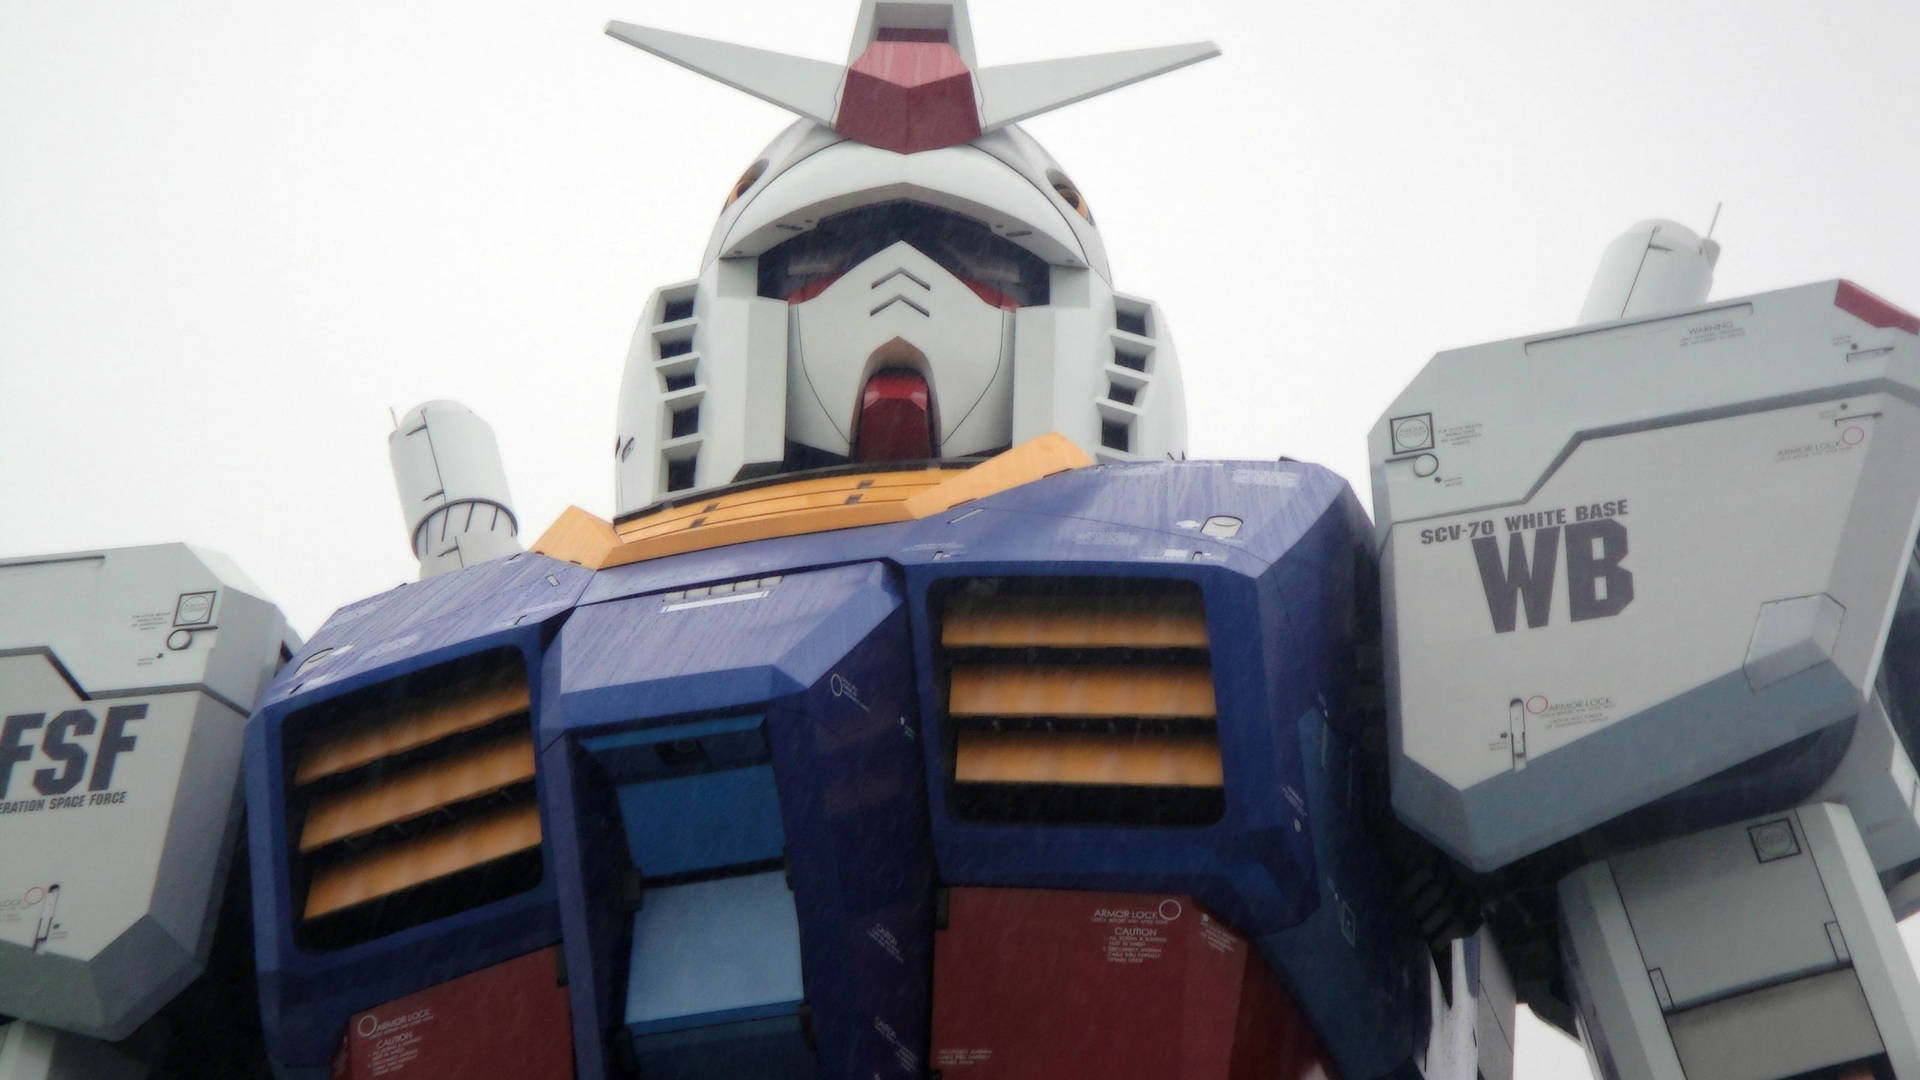 Gundam Suit Statue In Japan Background